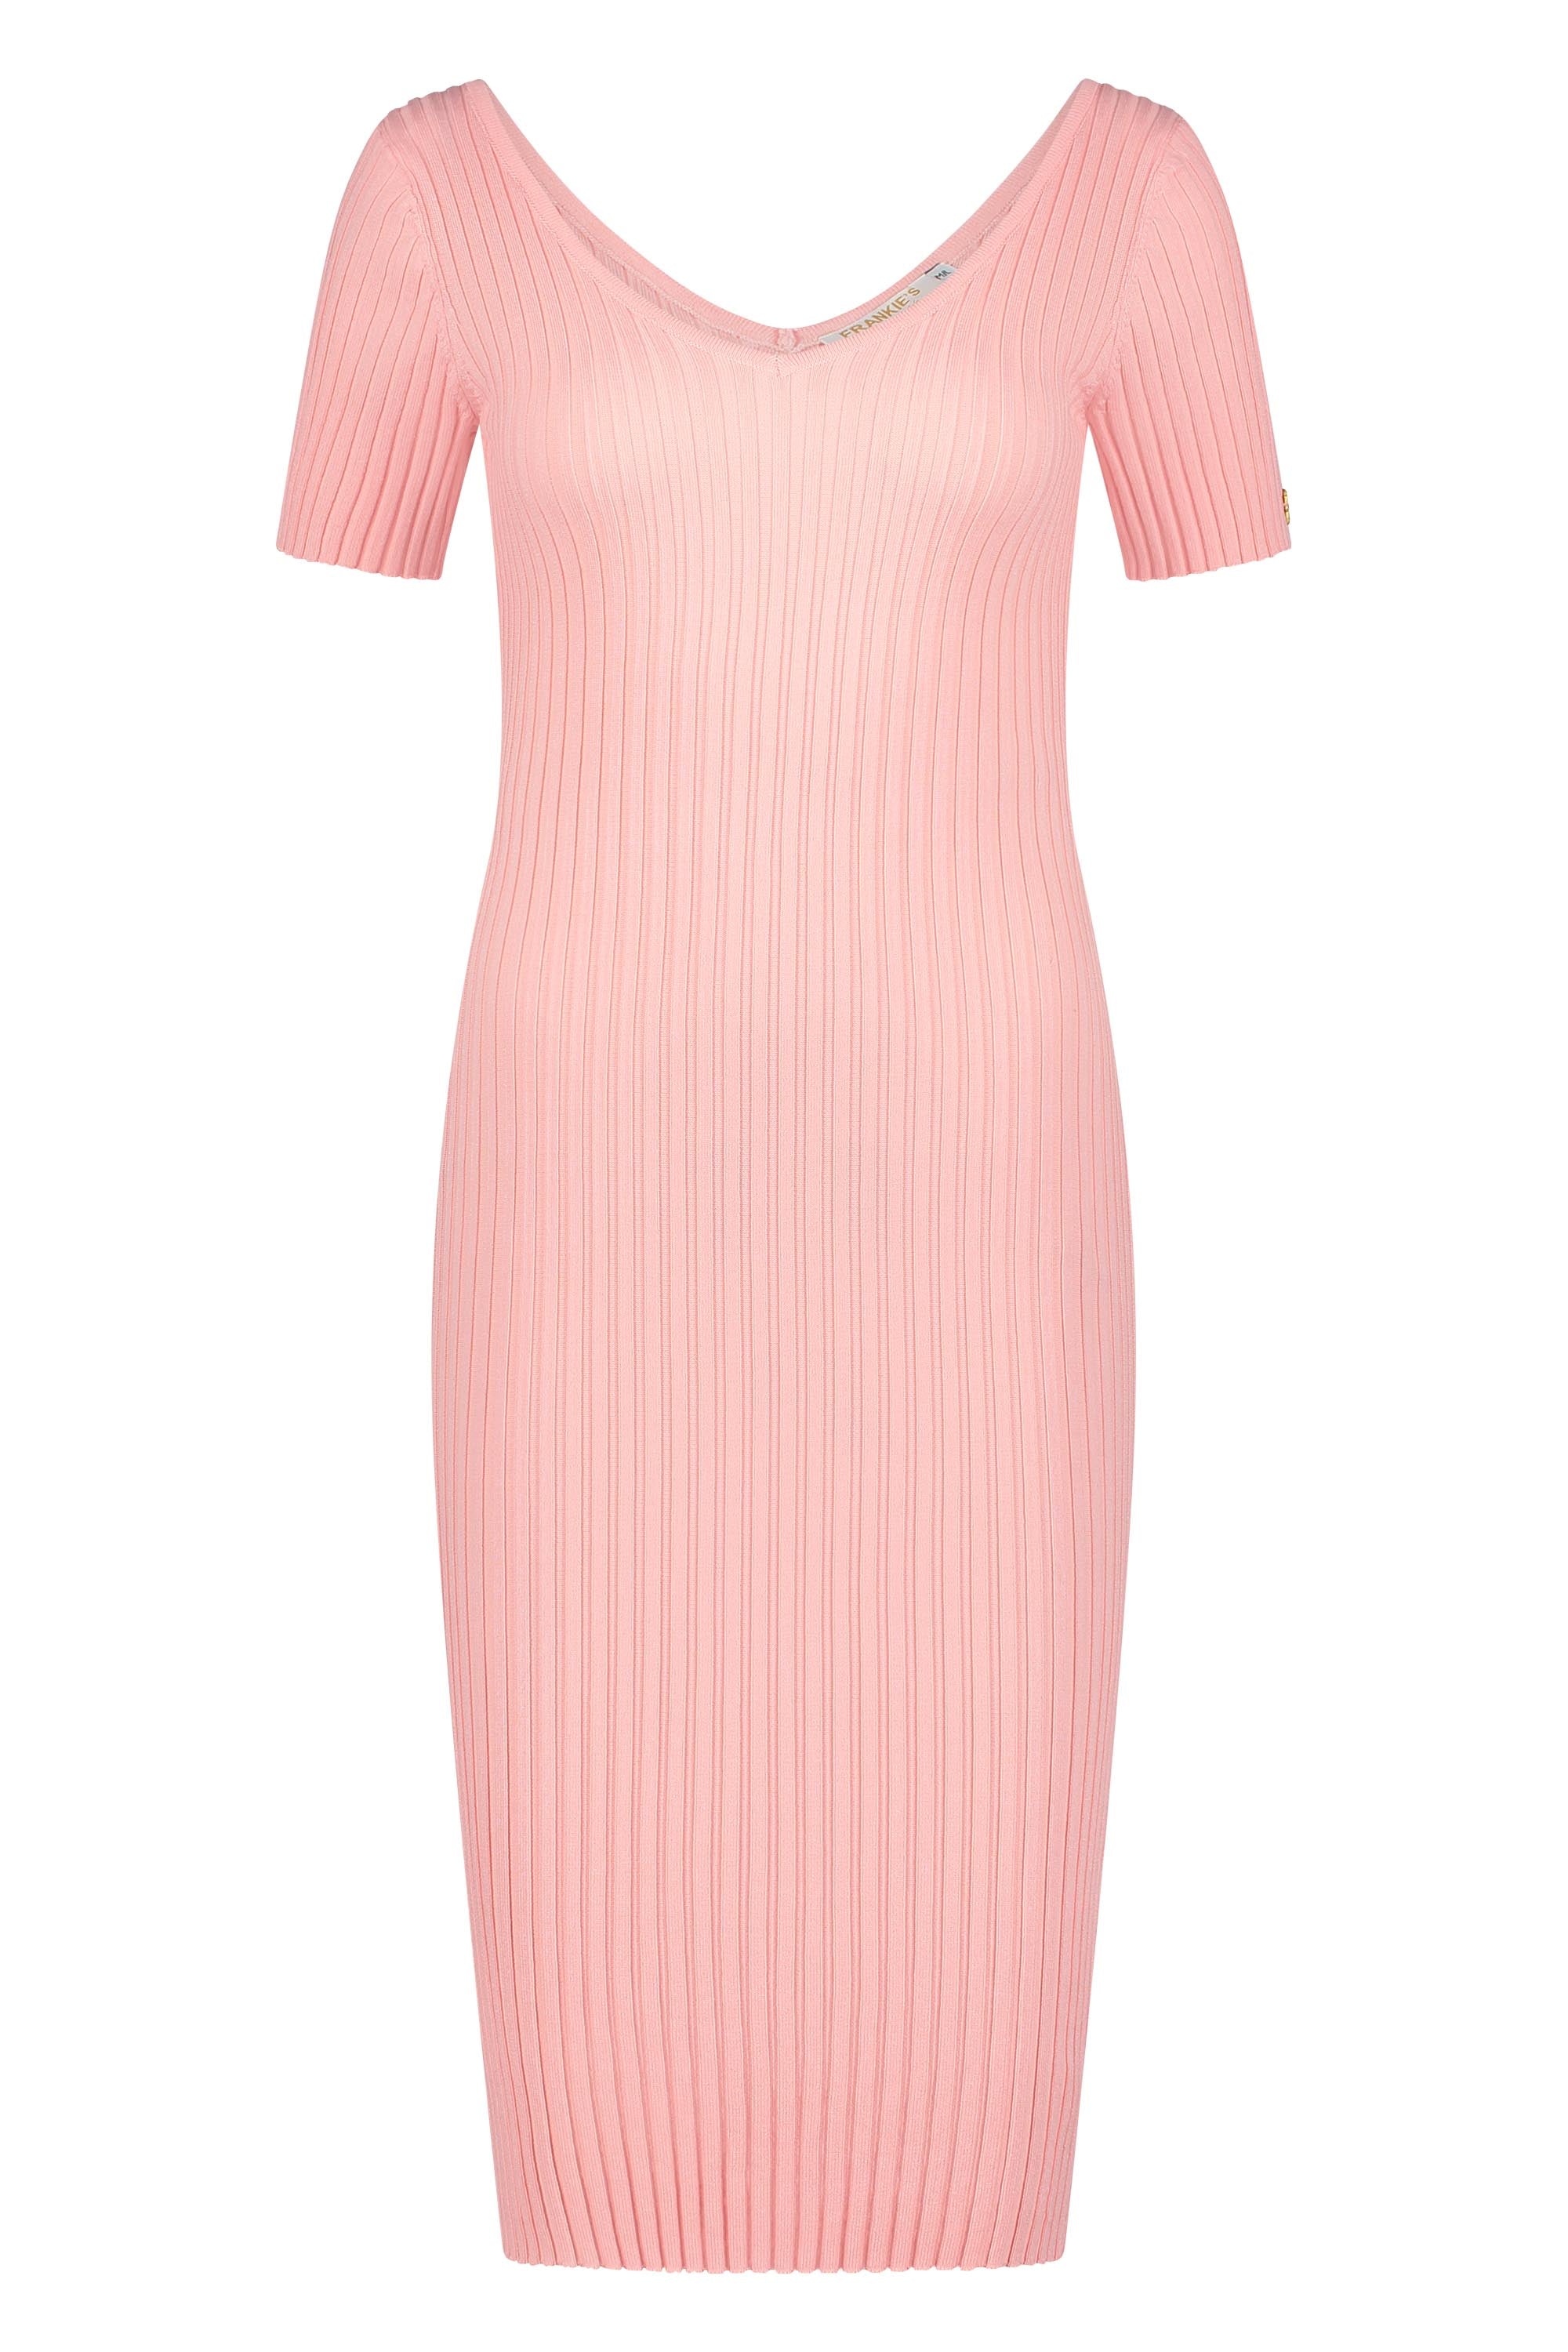 Dress knitwear short sleeve pink